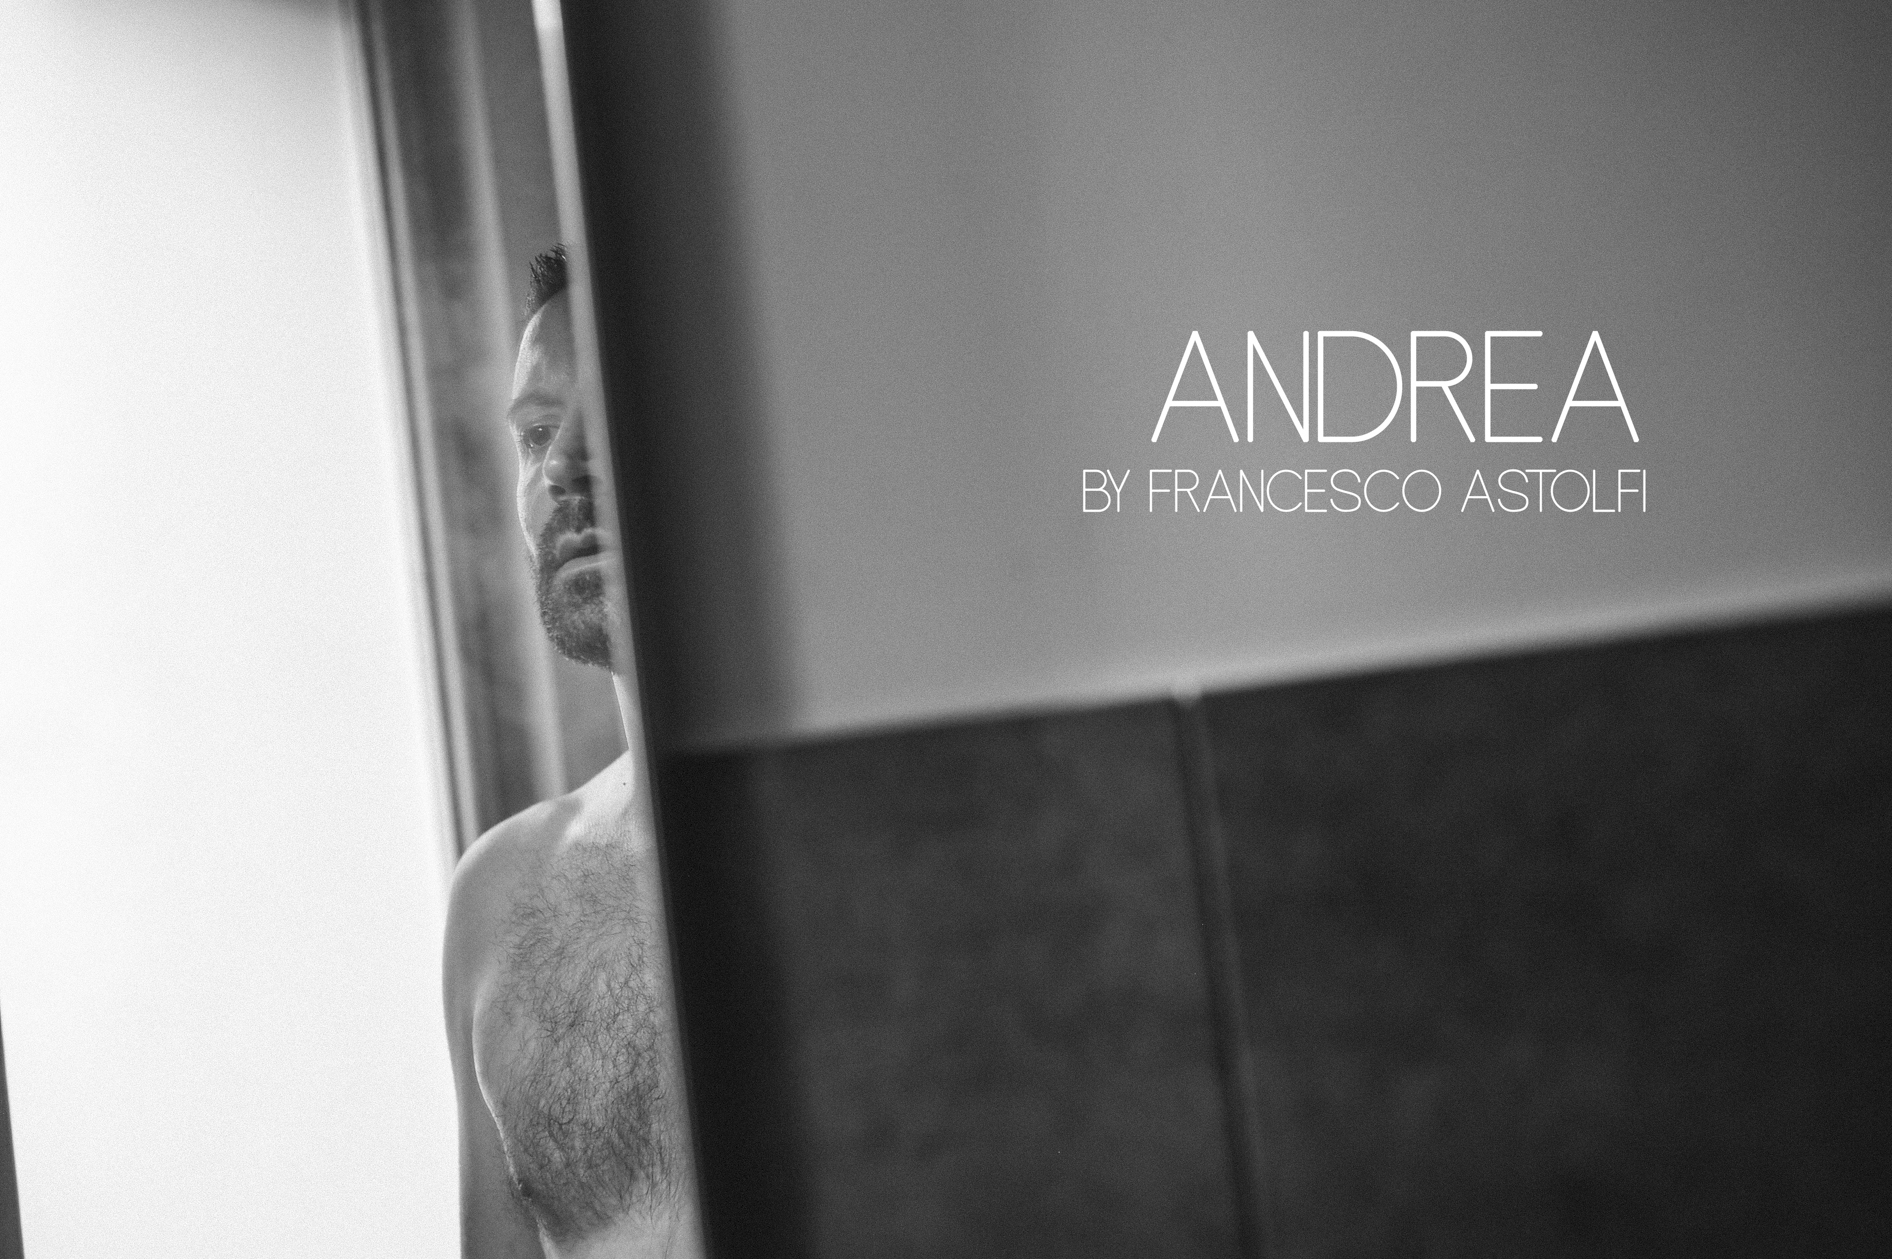 001 - ANDREA S. - Photo by Francesco Astolfi